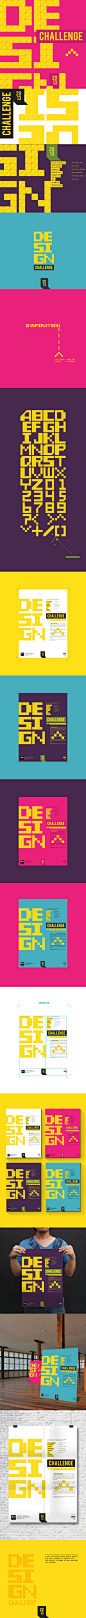 Design Challenge 2013 on Behance